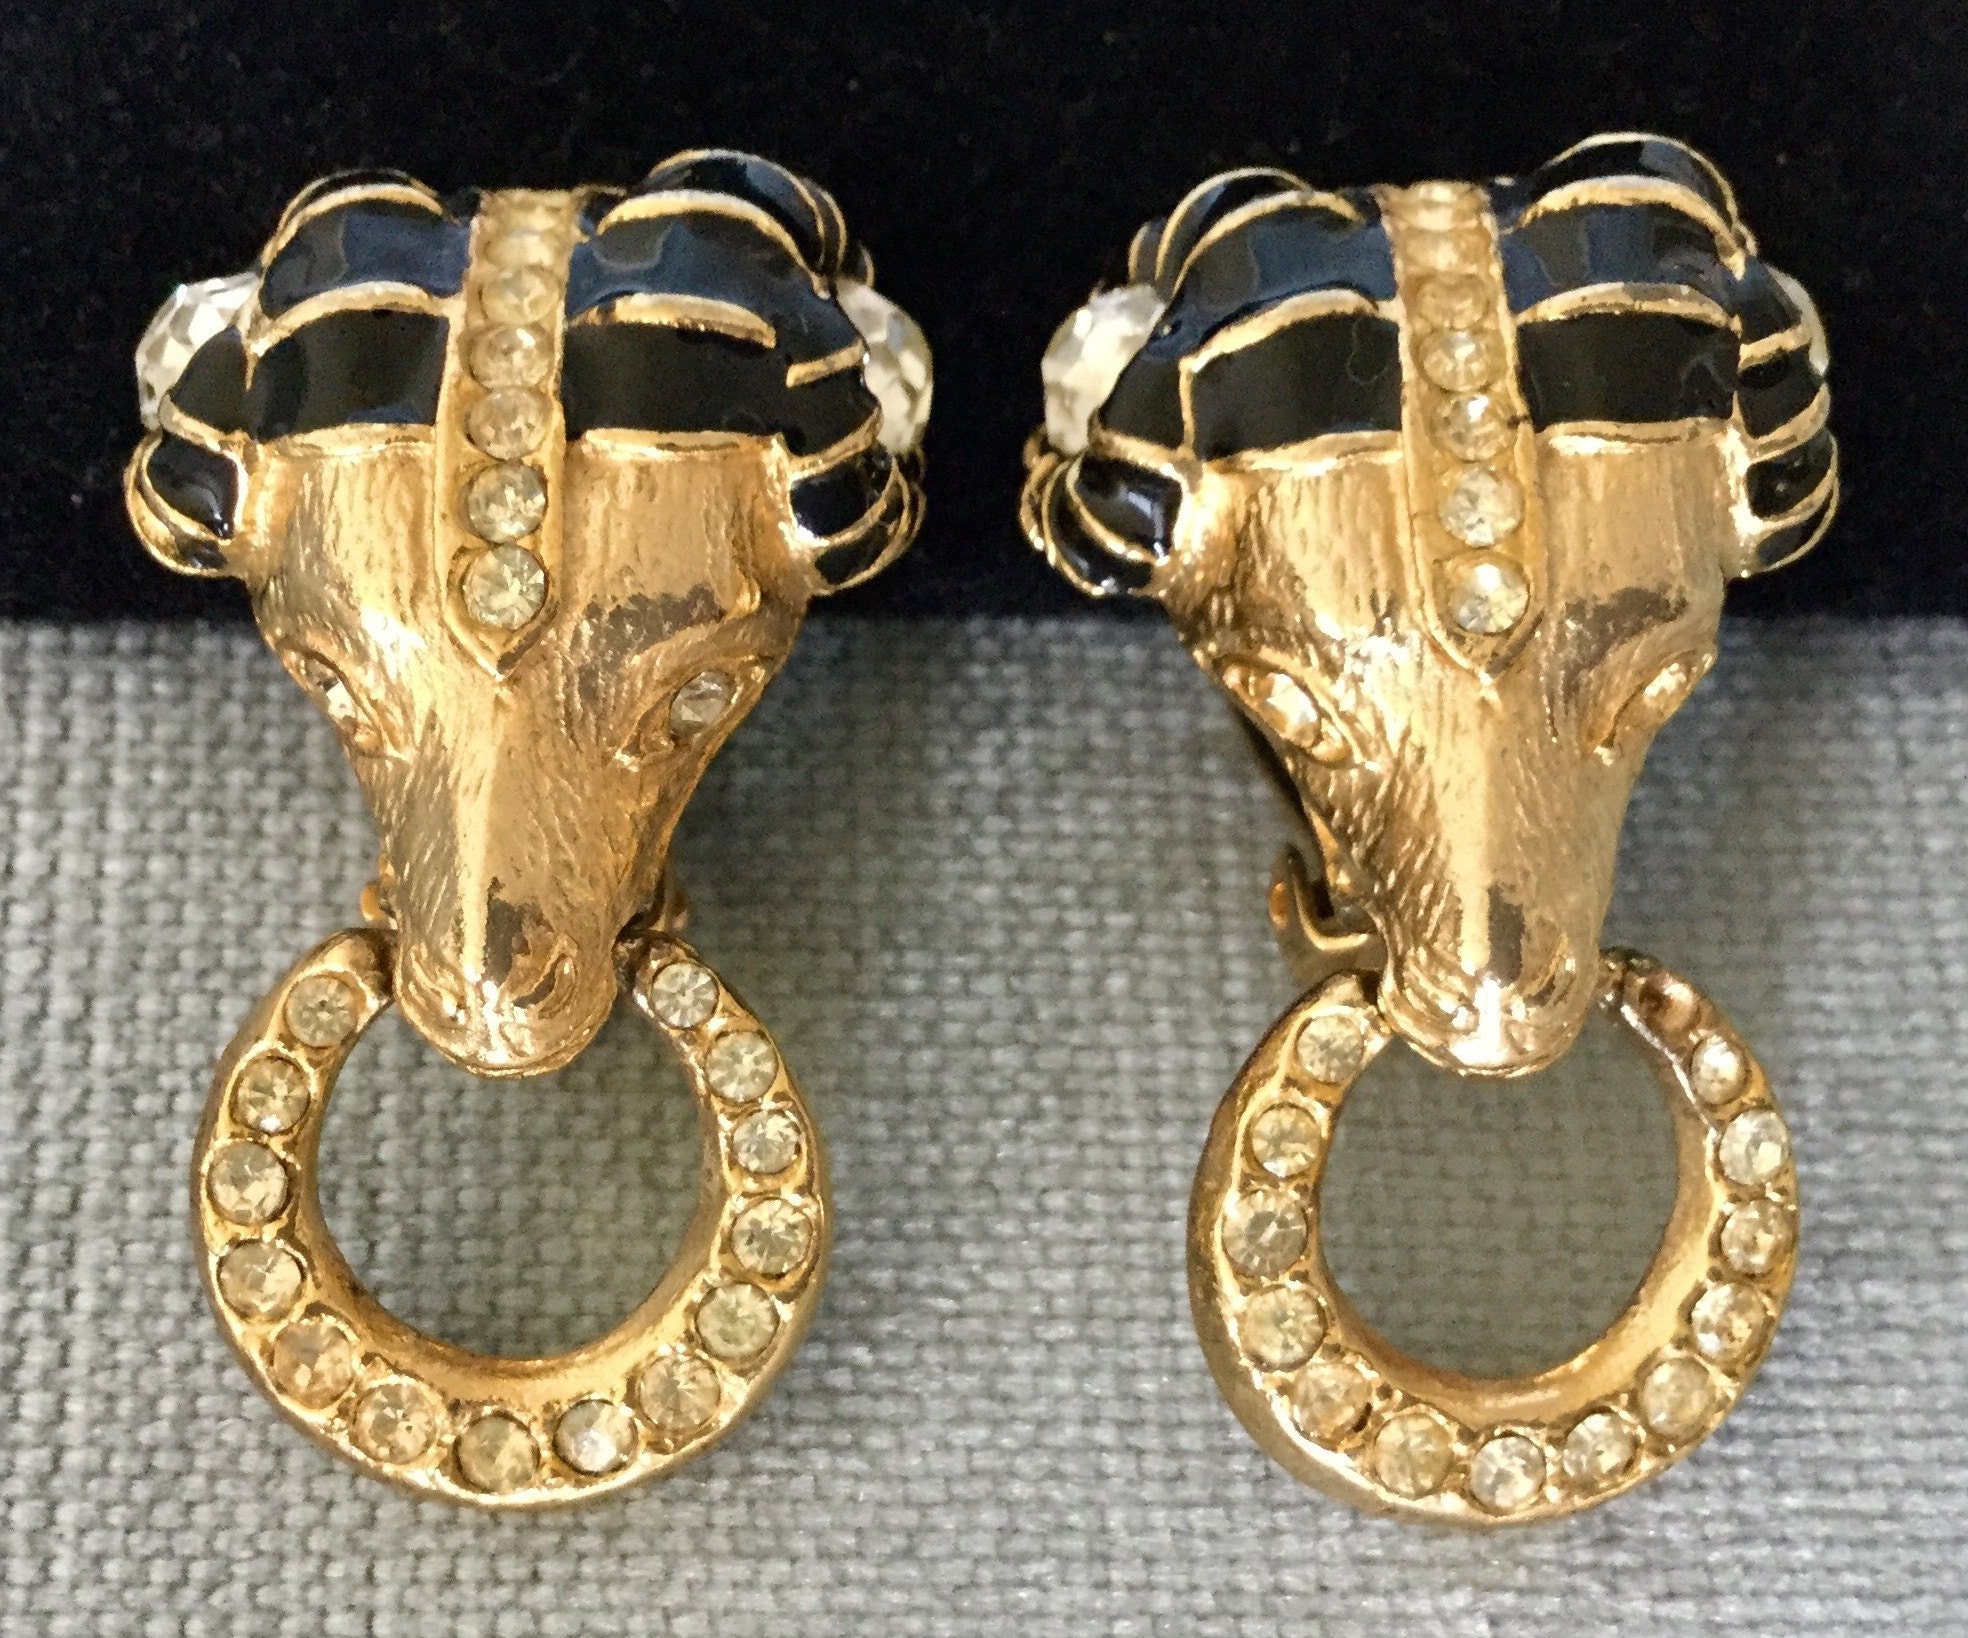 Chic Gay Boyer Signed Art Deco Ram's Head Doorknocker Enameled Jeweled Earrings Diamant Crystals Gold Metal Vintage Designer Runway Couture